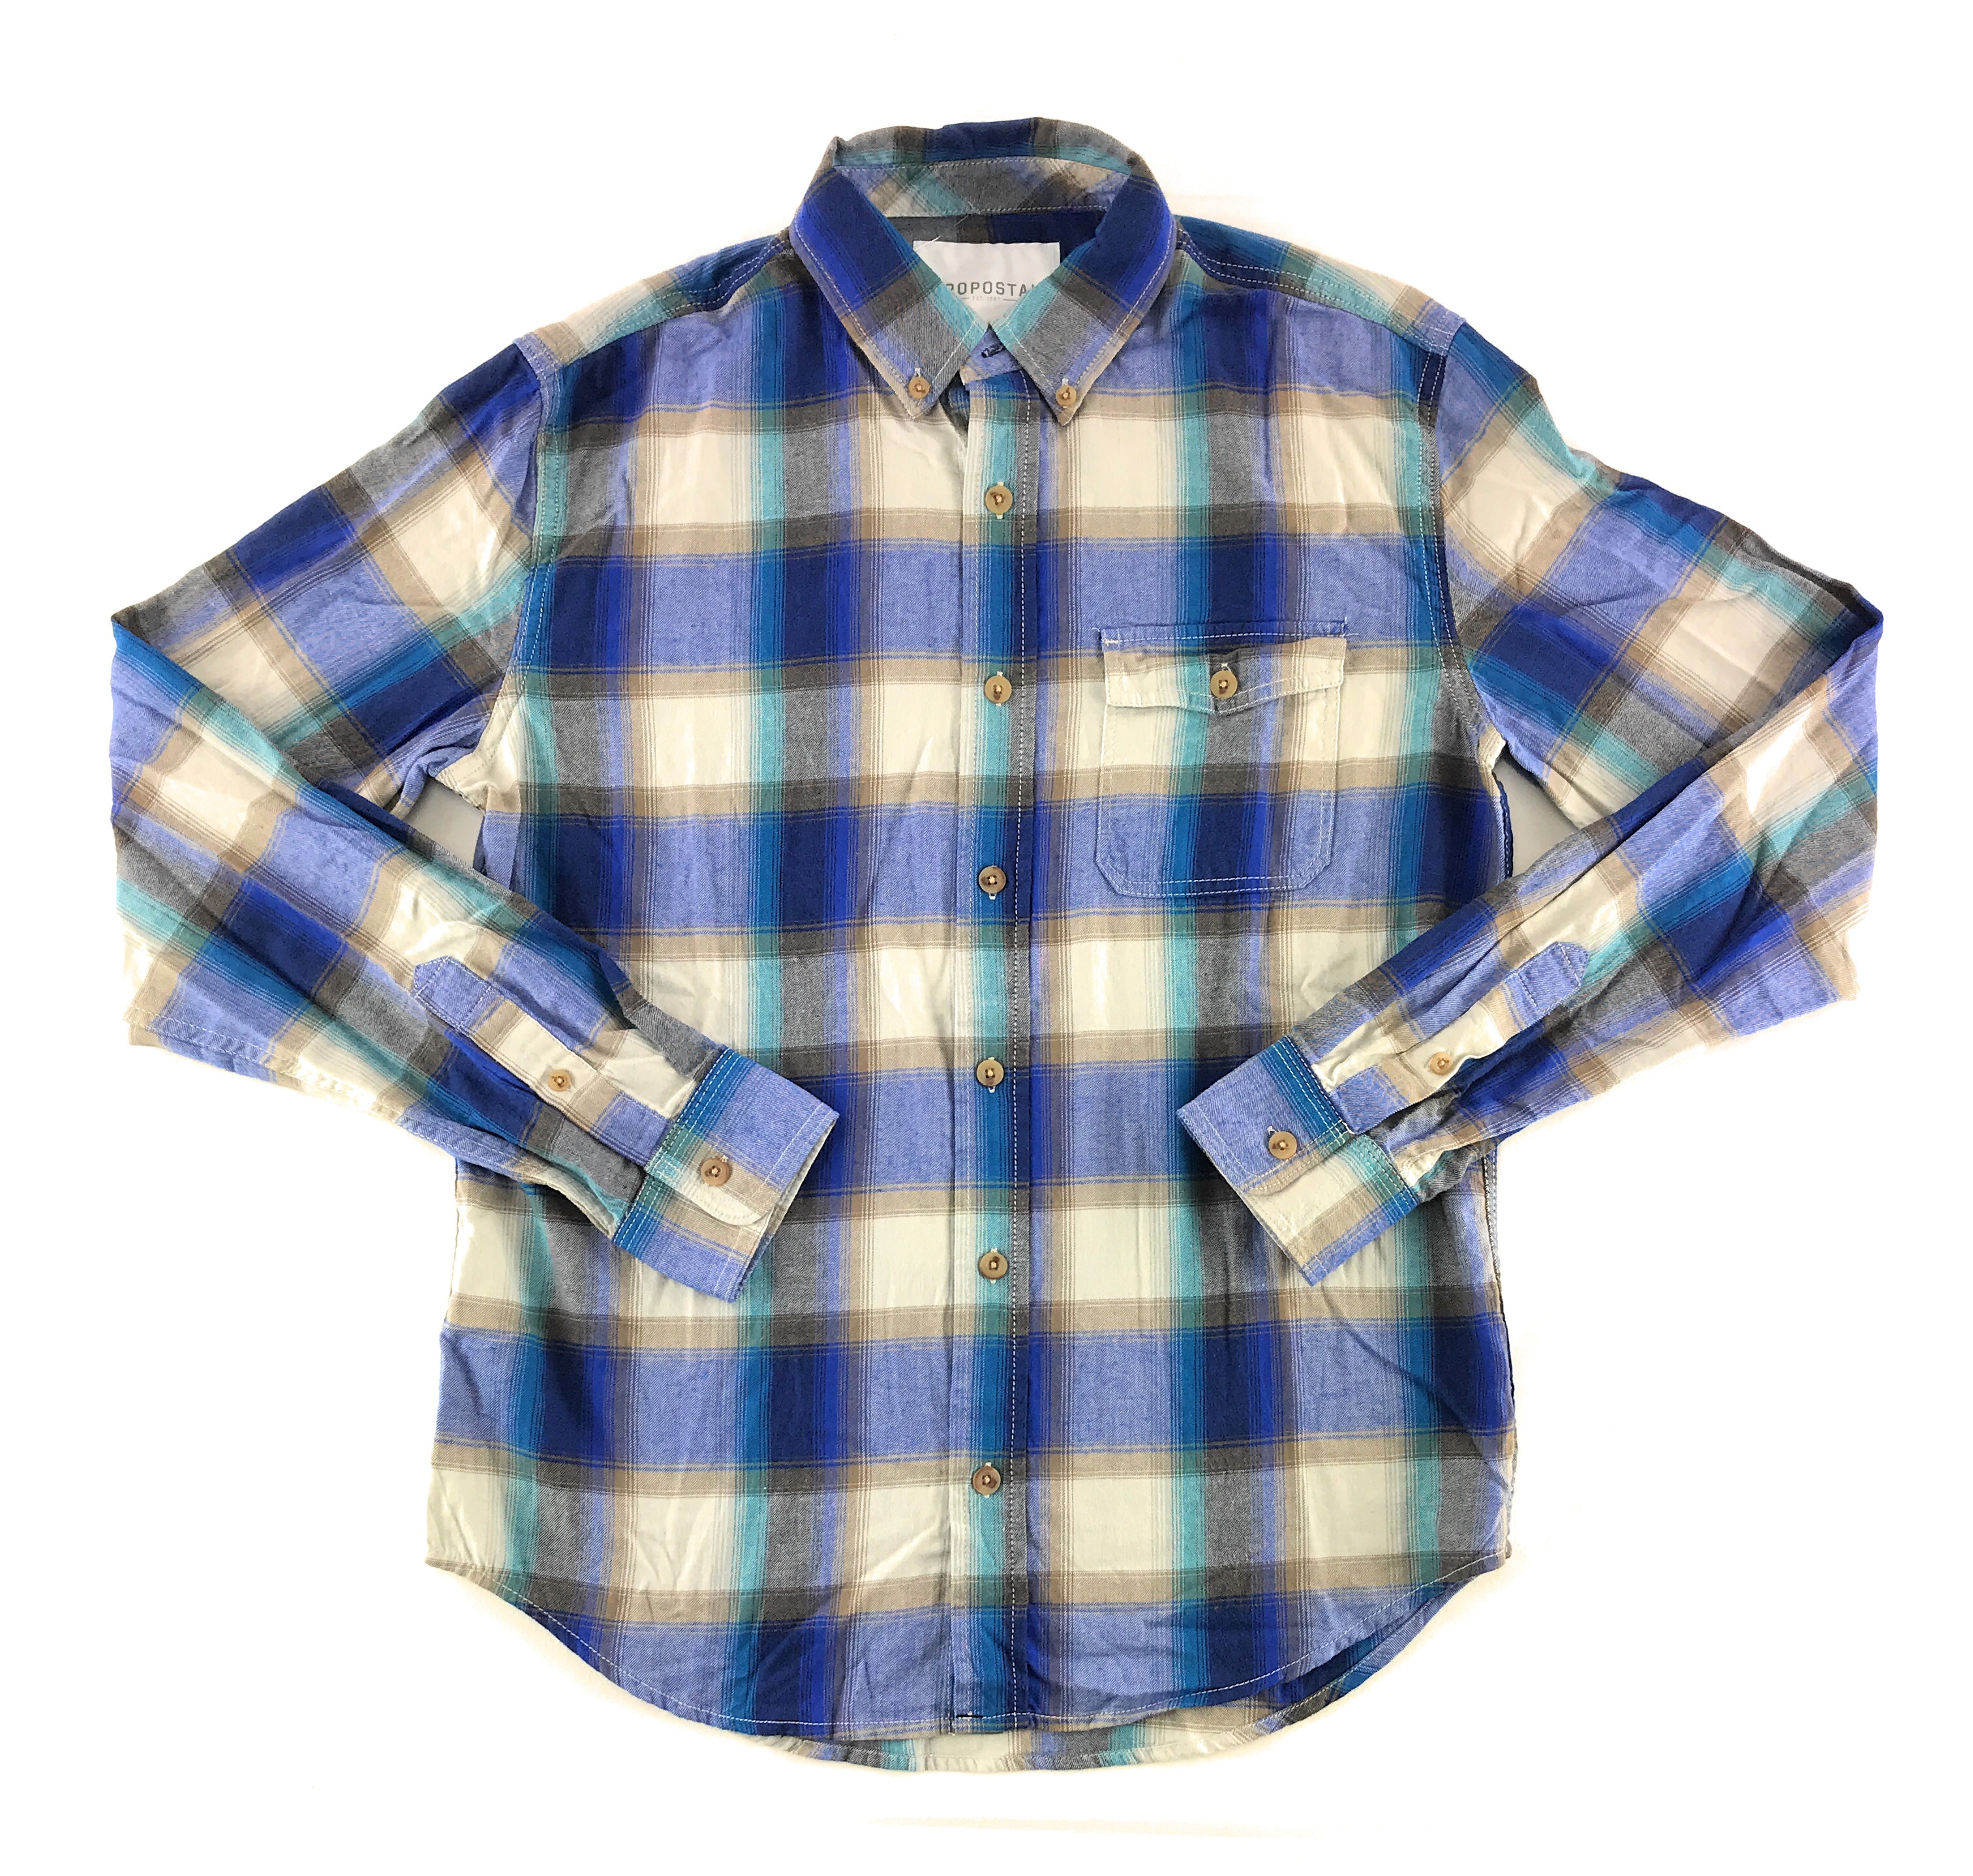 Aeropostale Mens Flannel Long Sleeve Shirt - Walmart.com